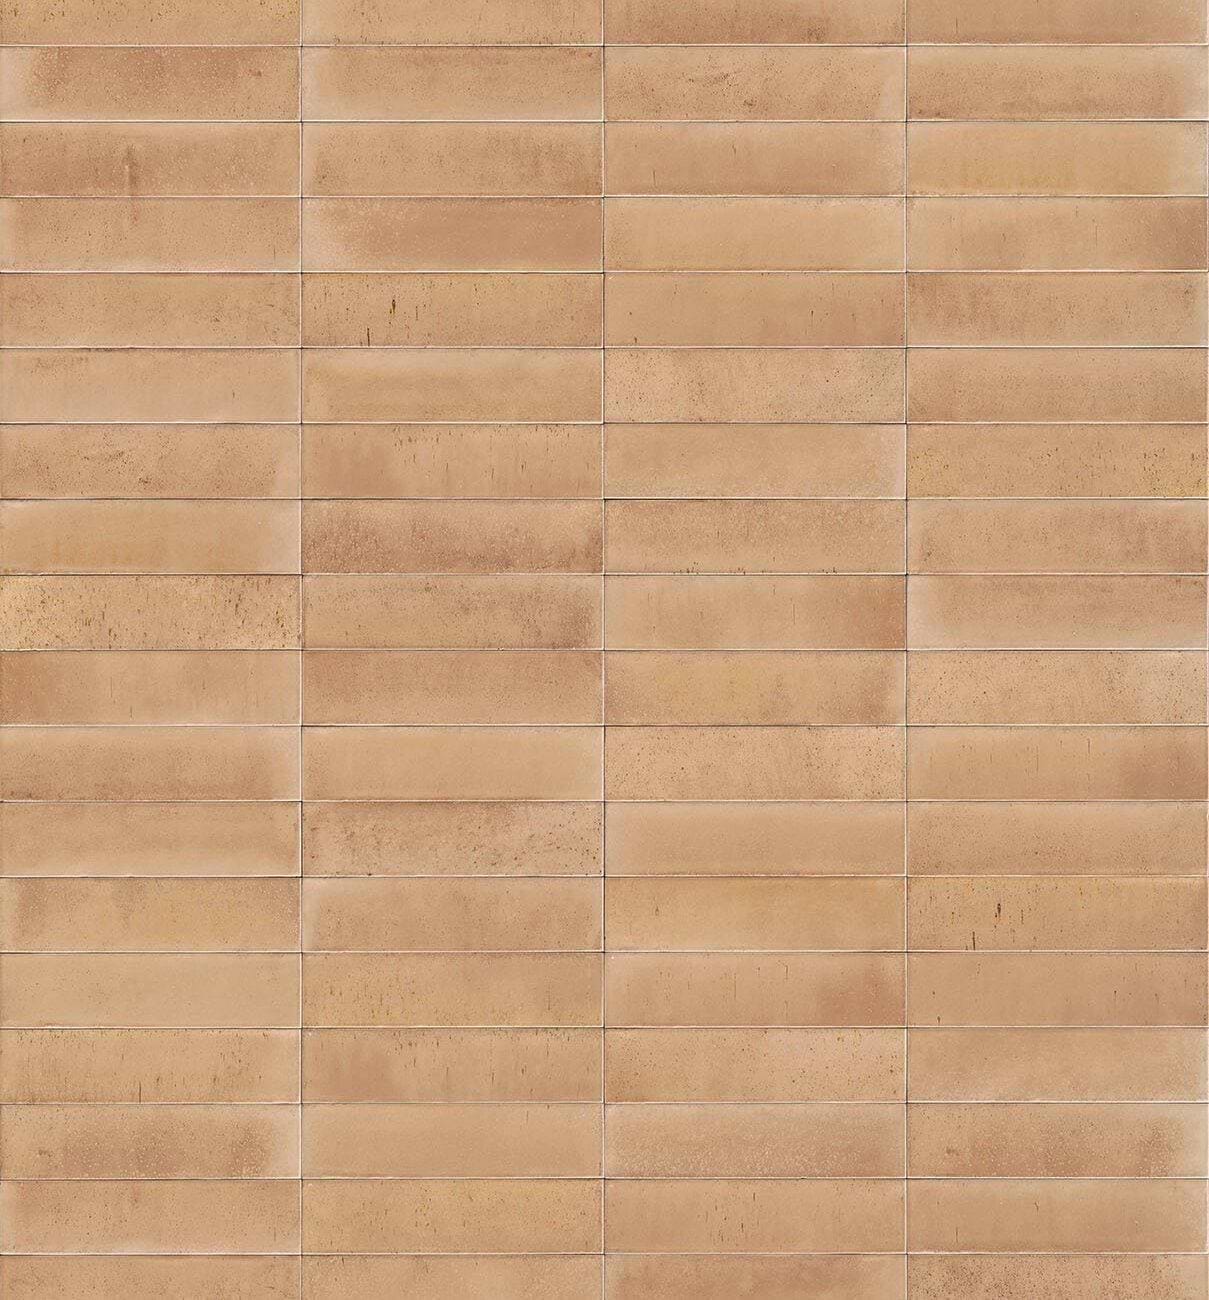 Minoli Wall & Floor Tiles 6 x 24 x 1cm Luminous Lume Pesca-Rosa (Pink)